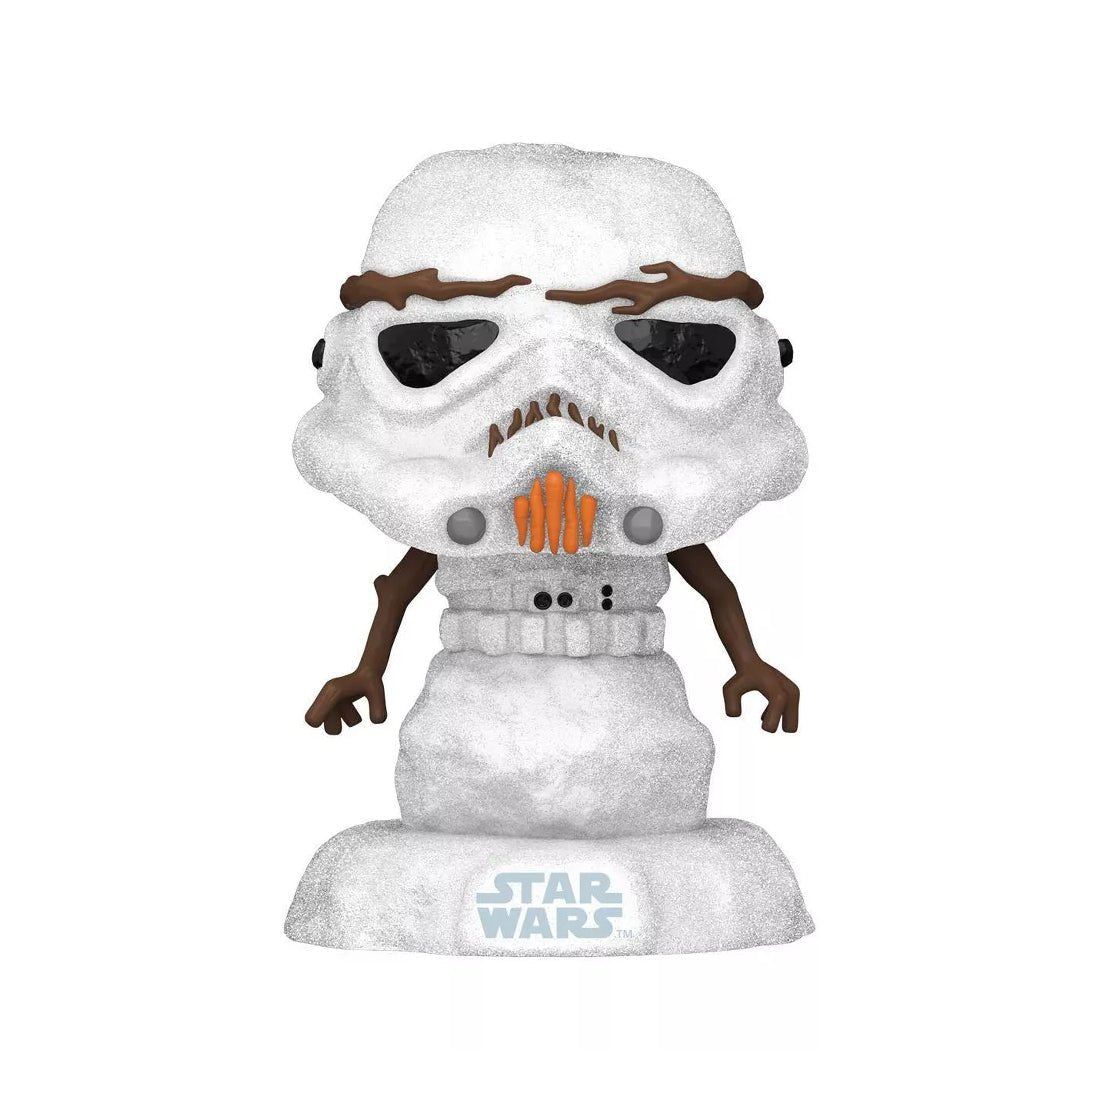 Funko Pop! Star Wars Holiday - Stormtrooper (Snowman) #557 - دمية - Store 974 | ستور ٩٧٤